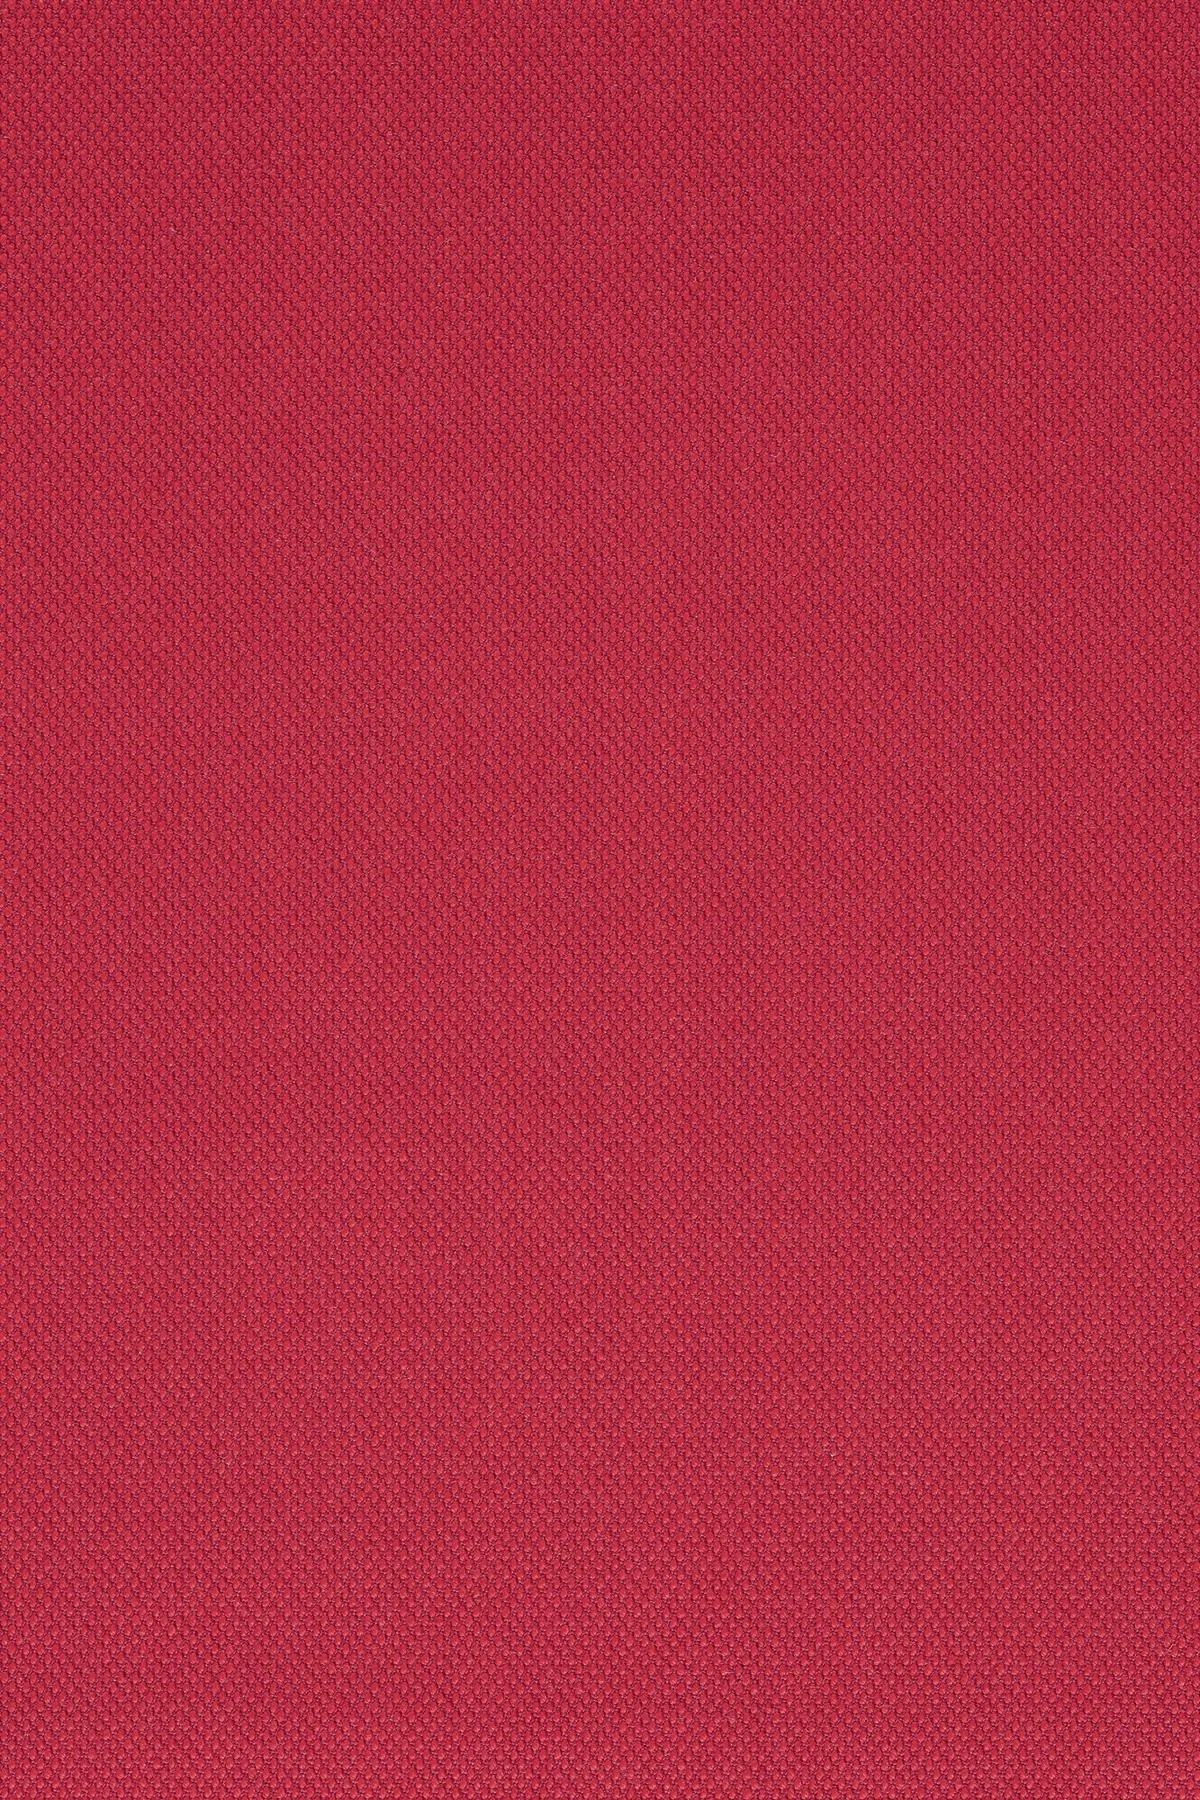 Fabric sample Steelcut Trio 3 666 red